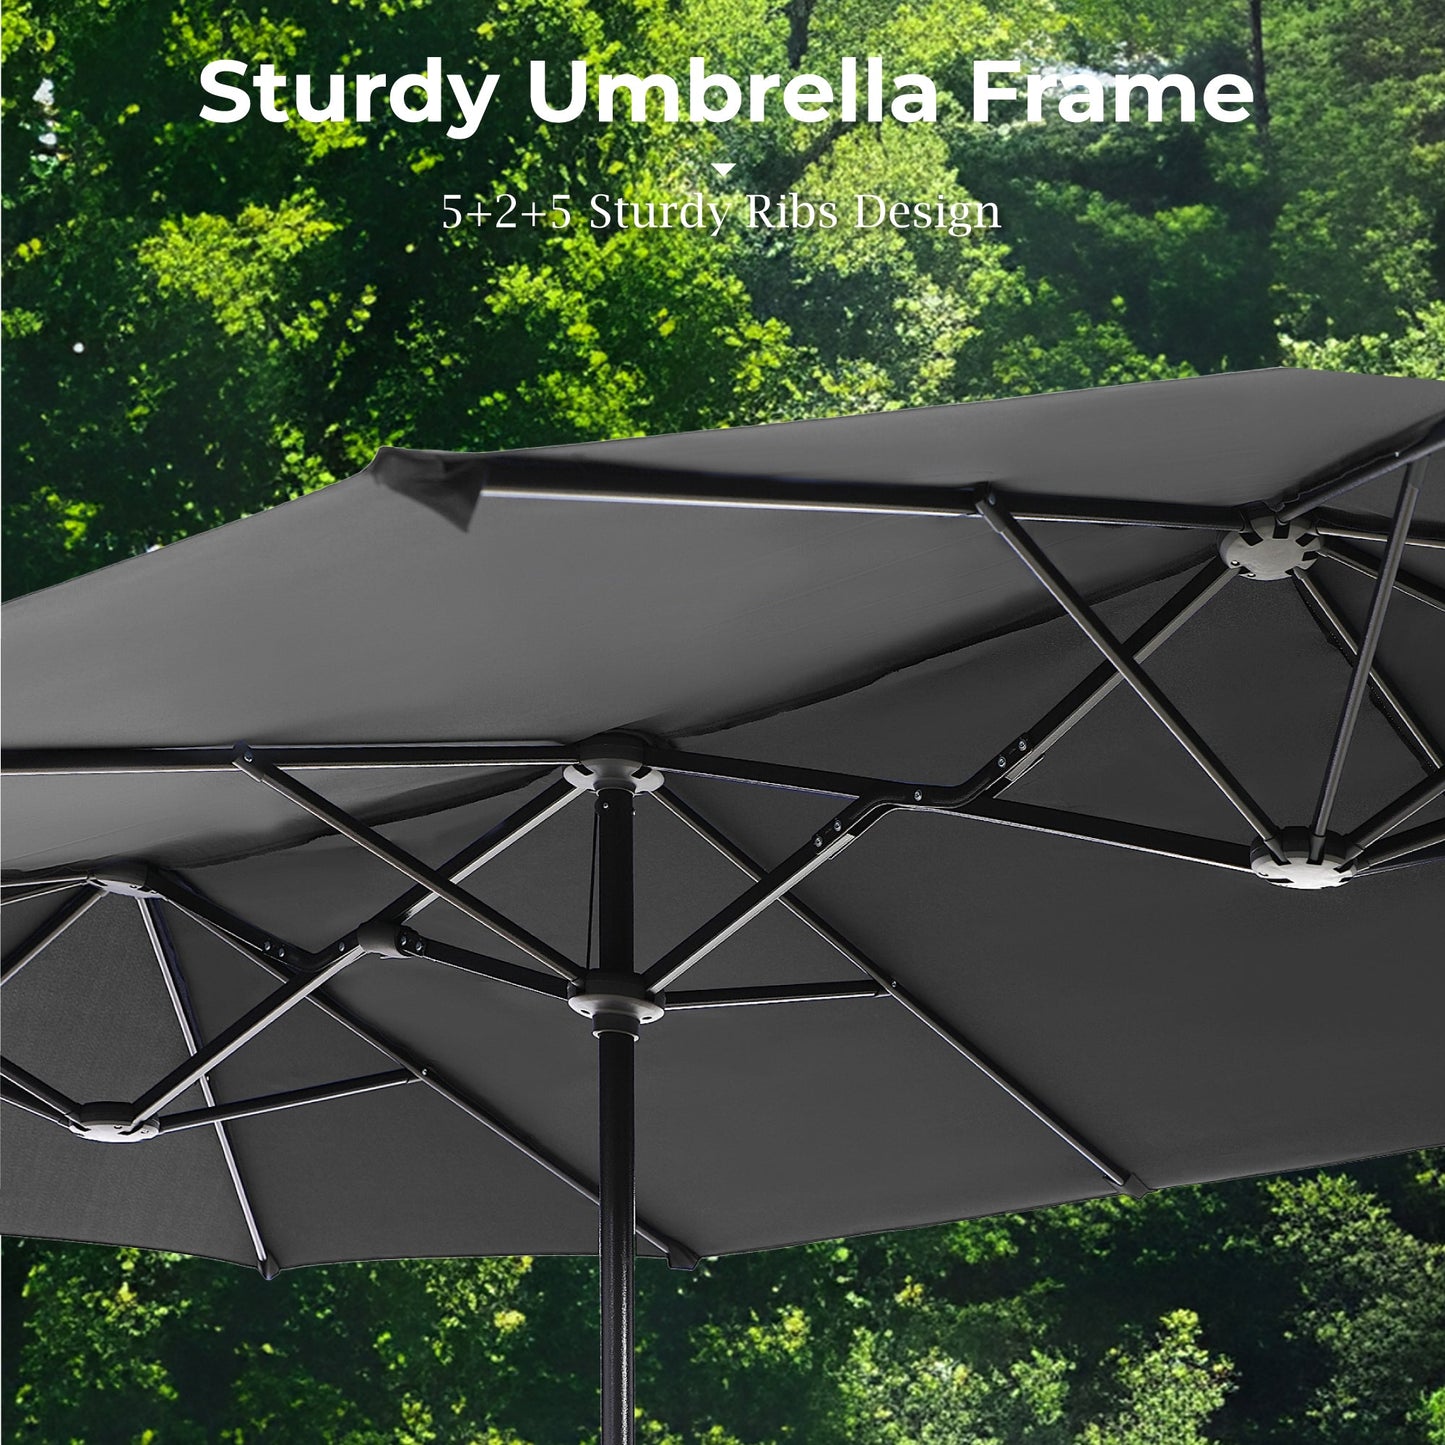 Alpha Joy 13x6.5ft Double-Sided Extra Large Outdoor Patio Market Rectangle Umbrella with Crank Handle, Light Gray